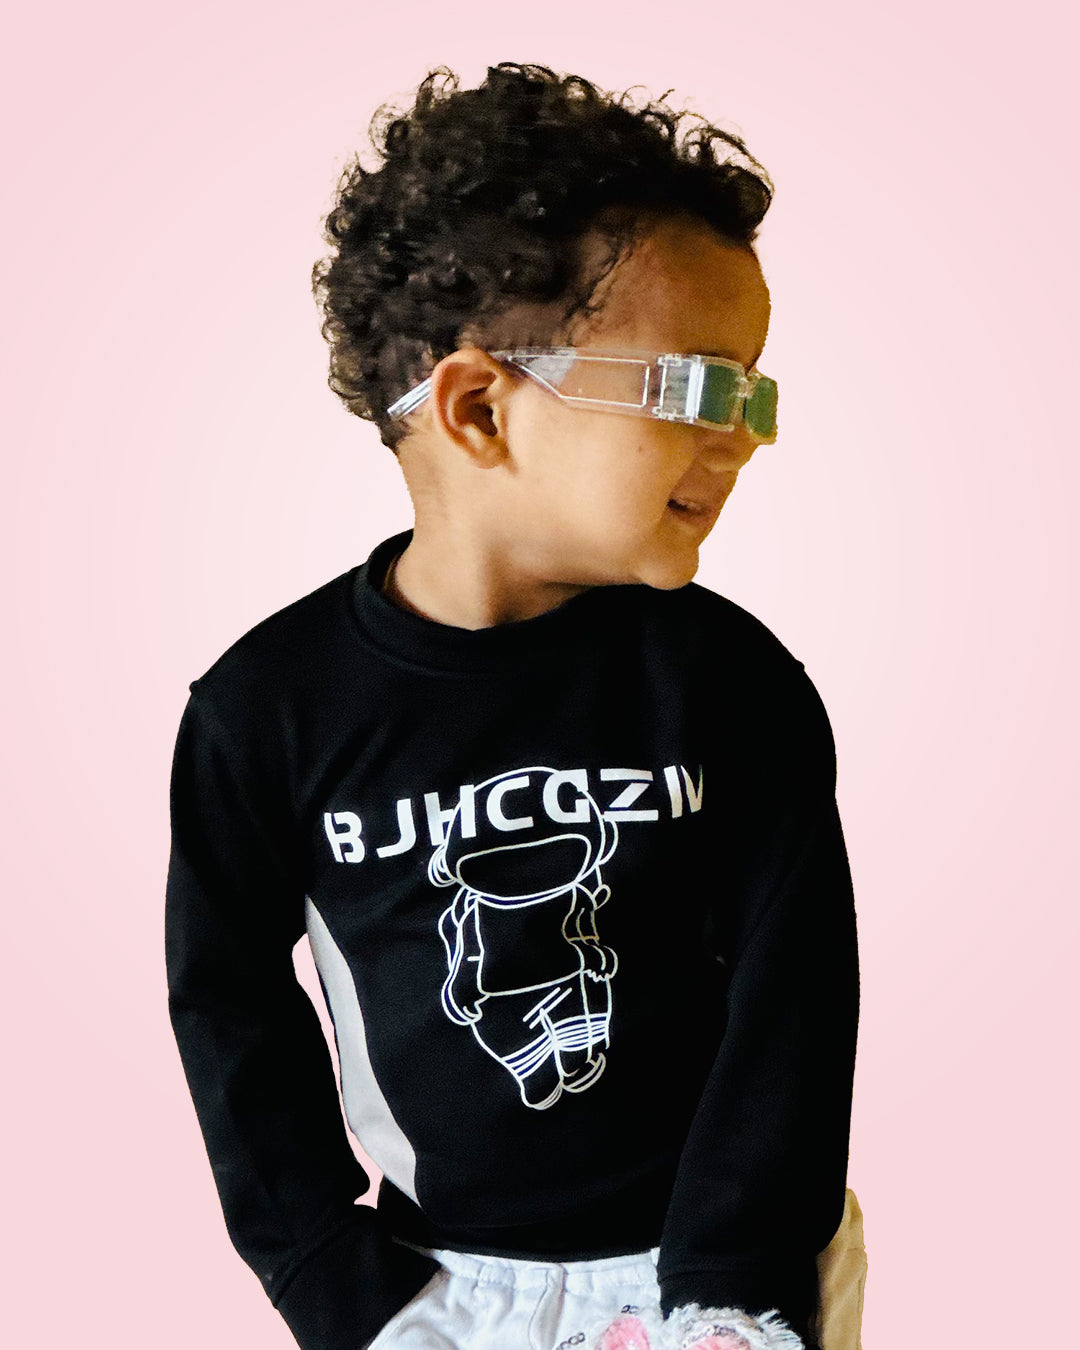 BJHCGZM X Black Unisex full Sleeves T-shirt